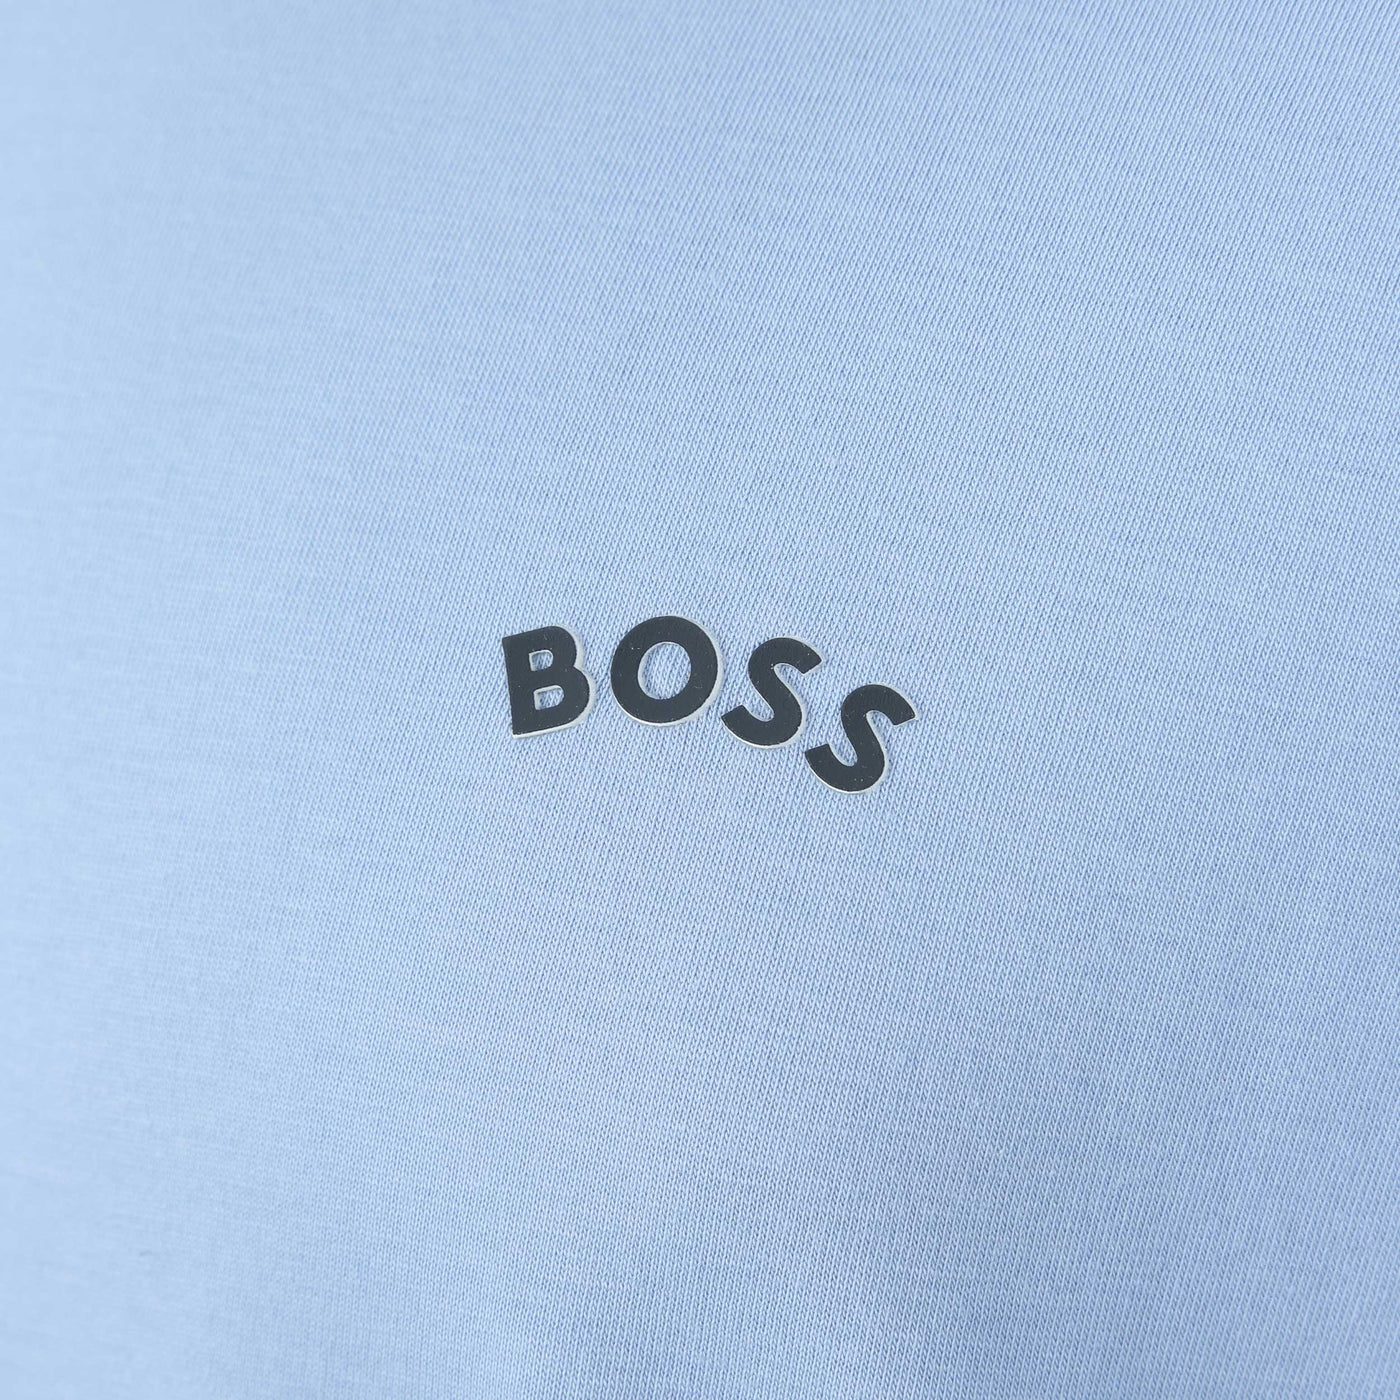 BOSS Tee Curved T-Shirt in Open Blue Logo